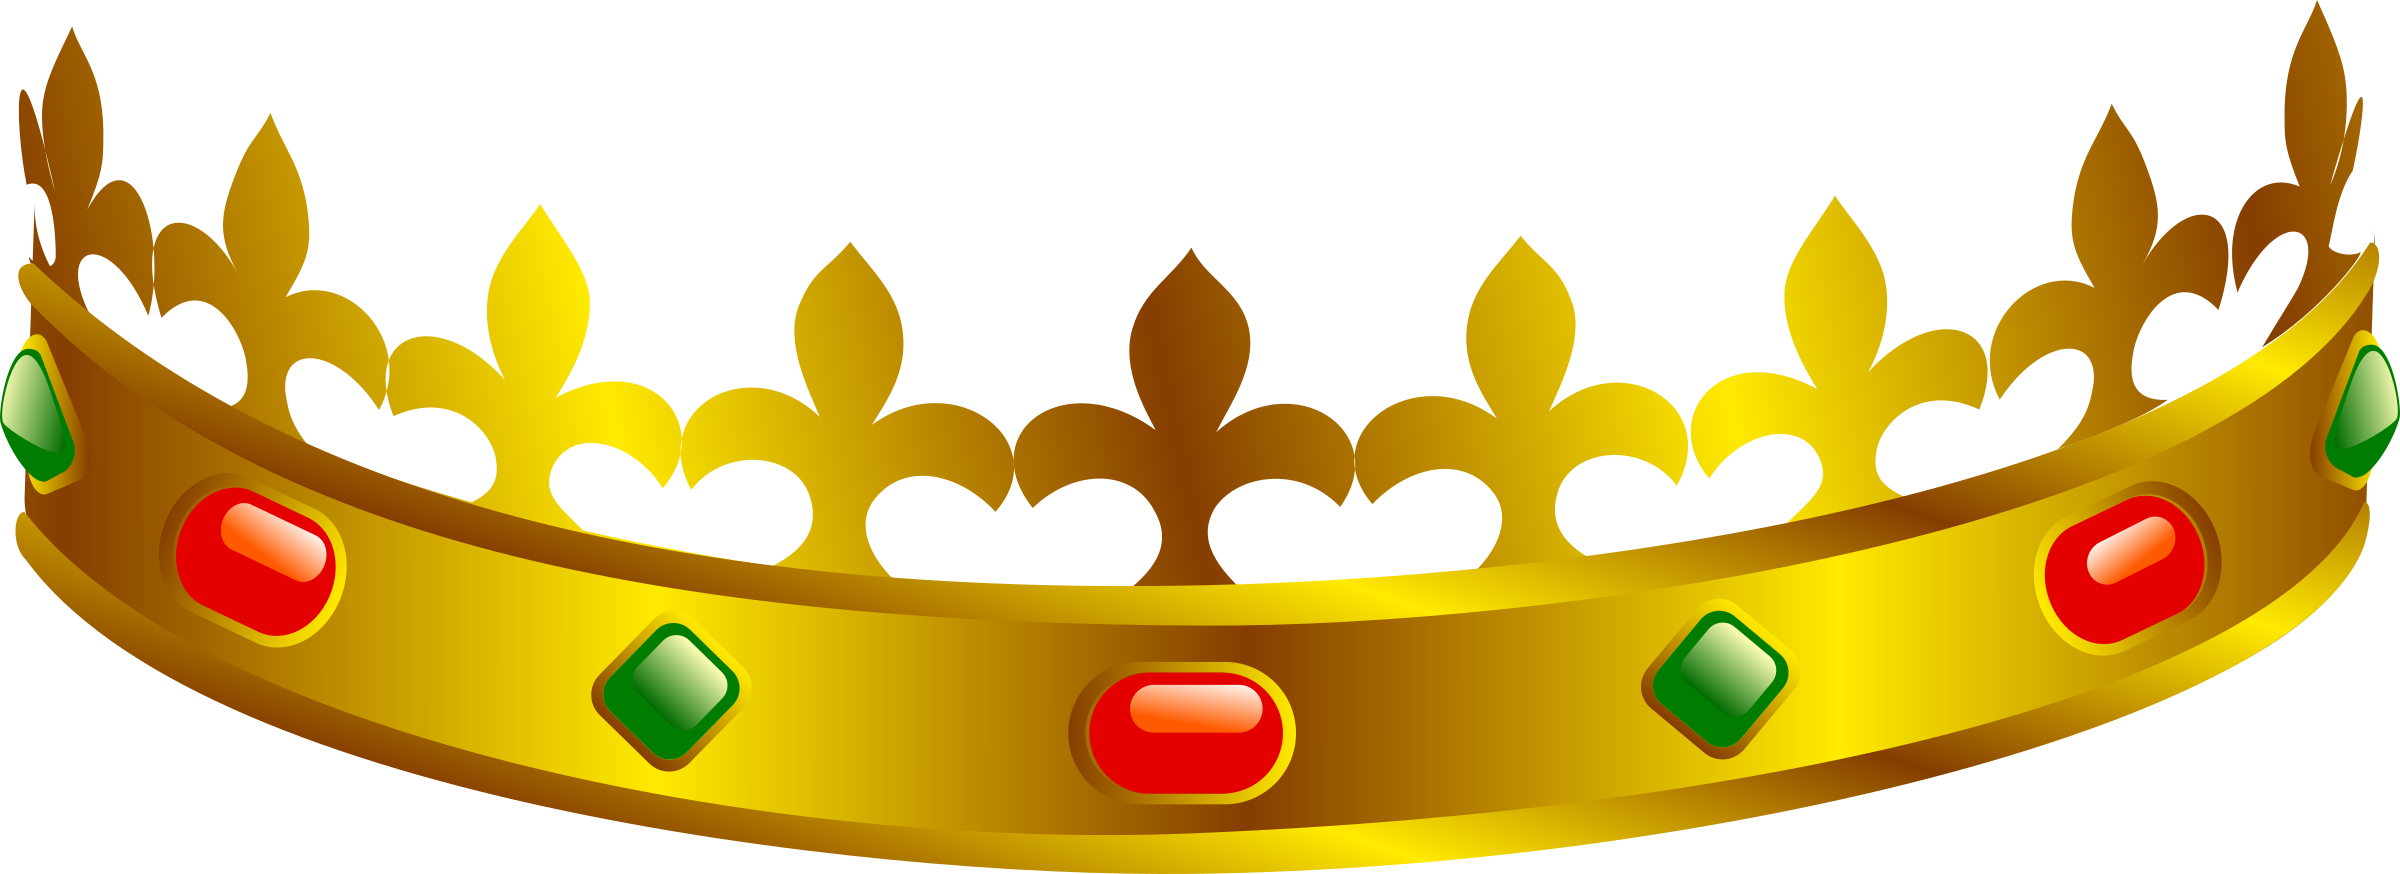 london clipart crown